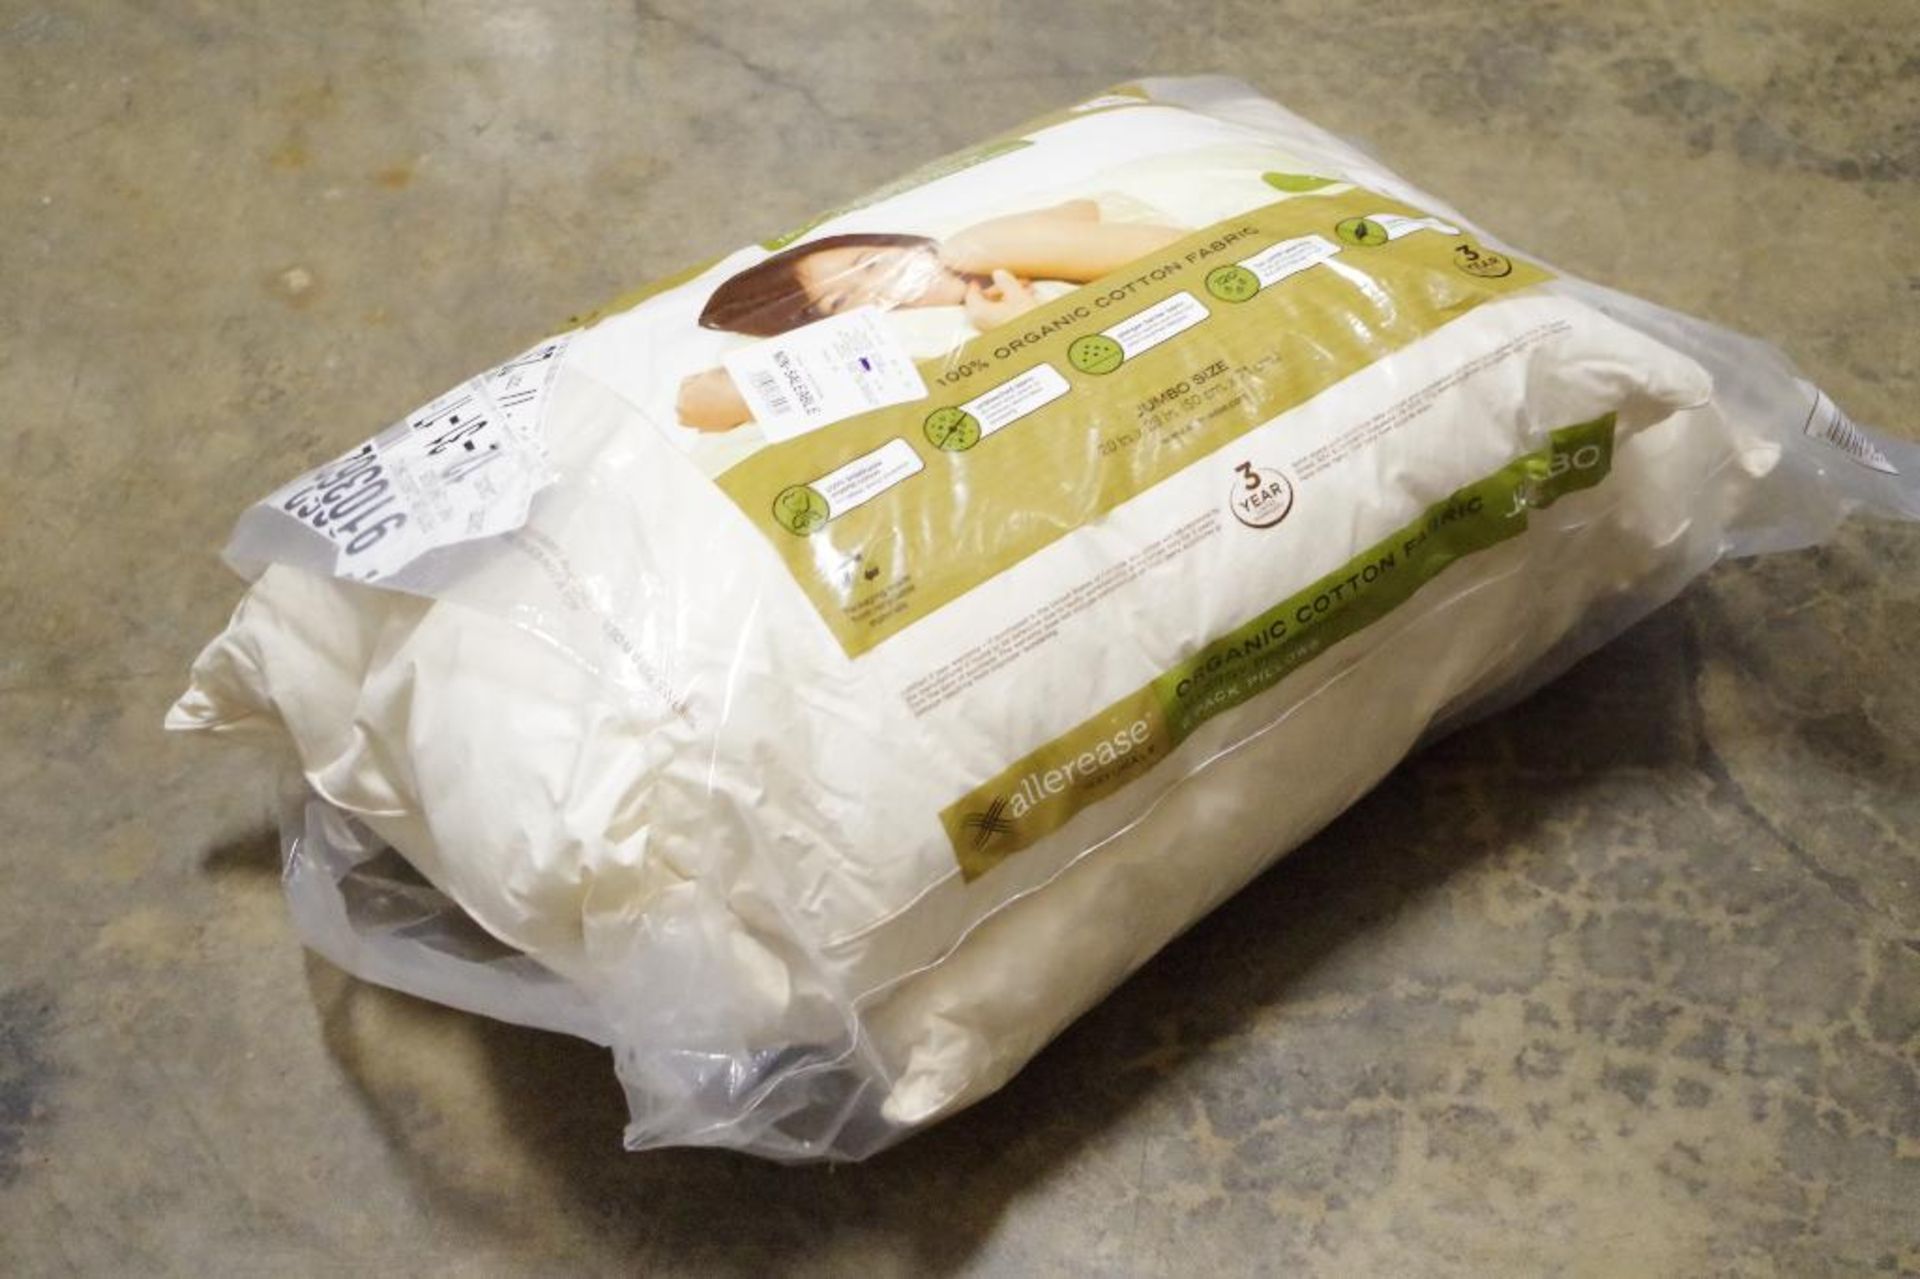 [2] ALLEREASE Jumbo Sized 100% Organic Cotton Fabric Pillows, Store Return